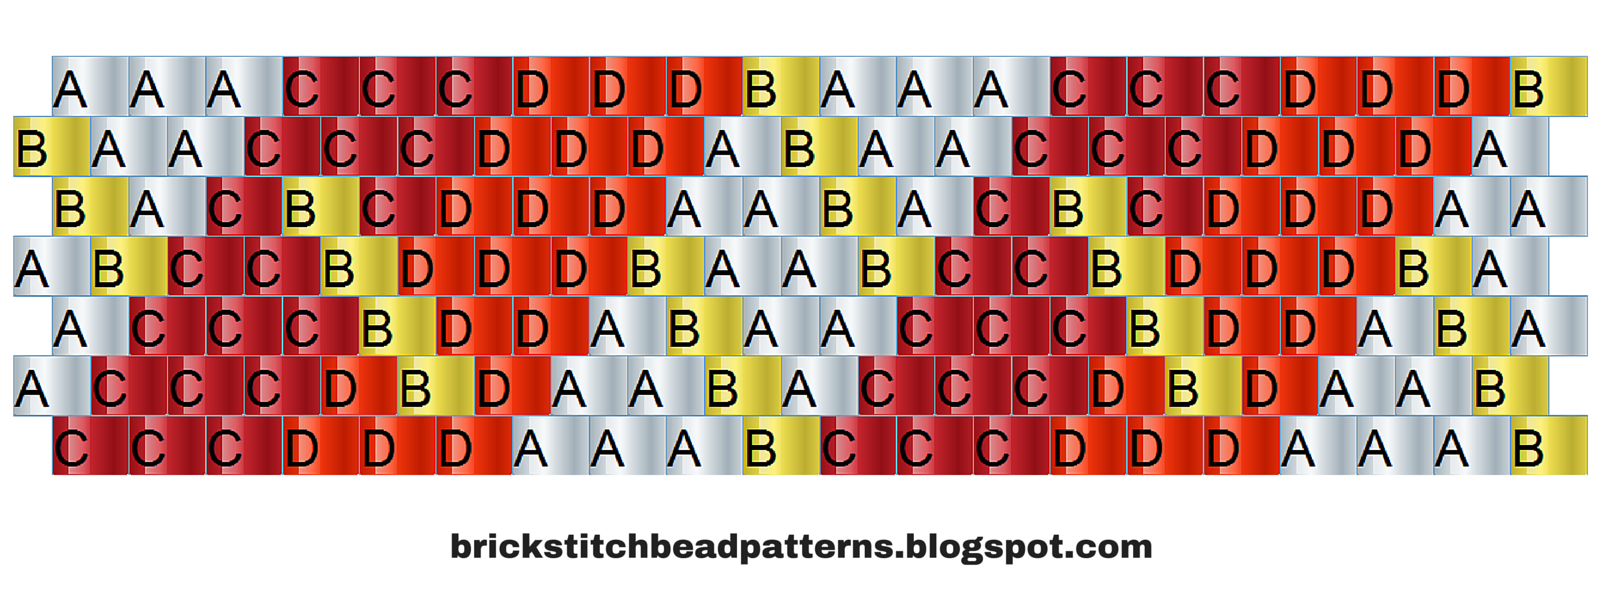 Brick Stitch Bead Patterns Journal 10 Free Brick Stitch Pony Bead Cuff Bracelet Pattern